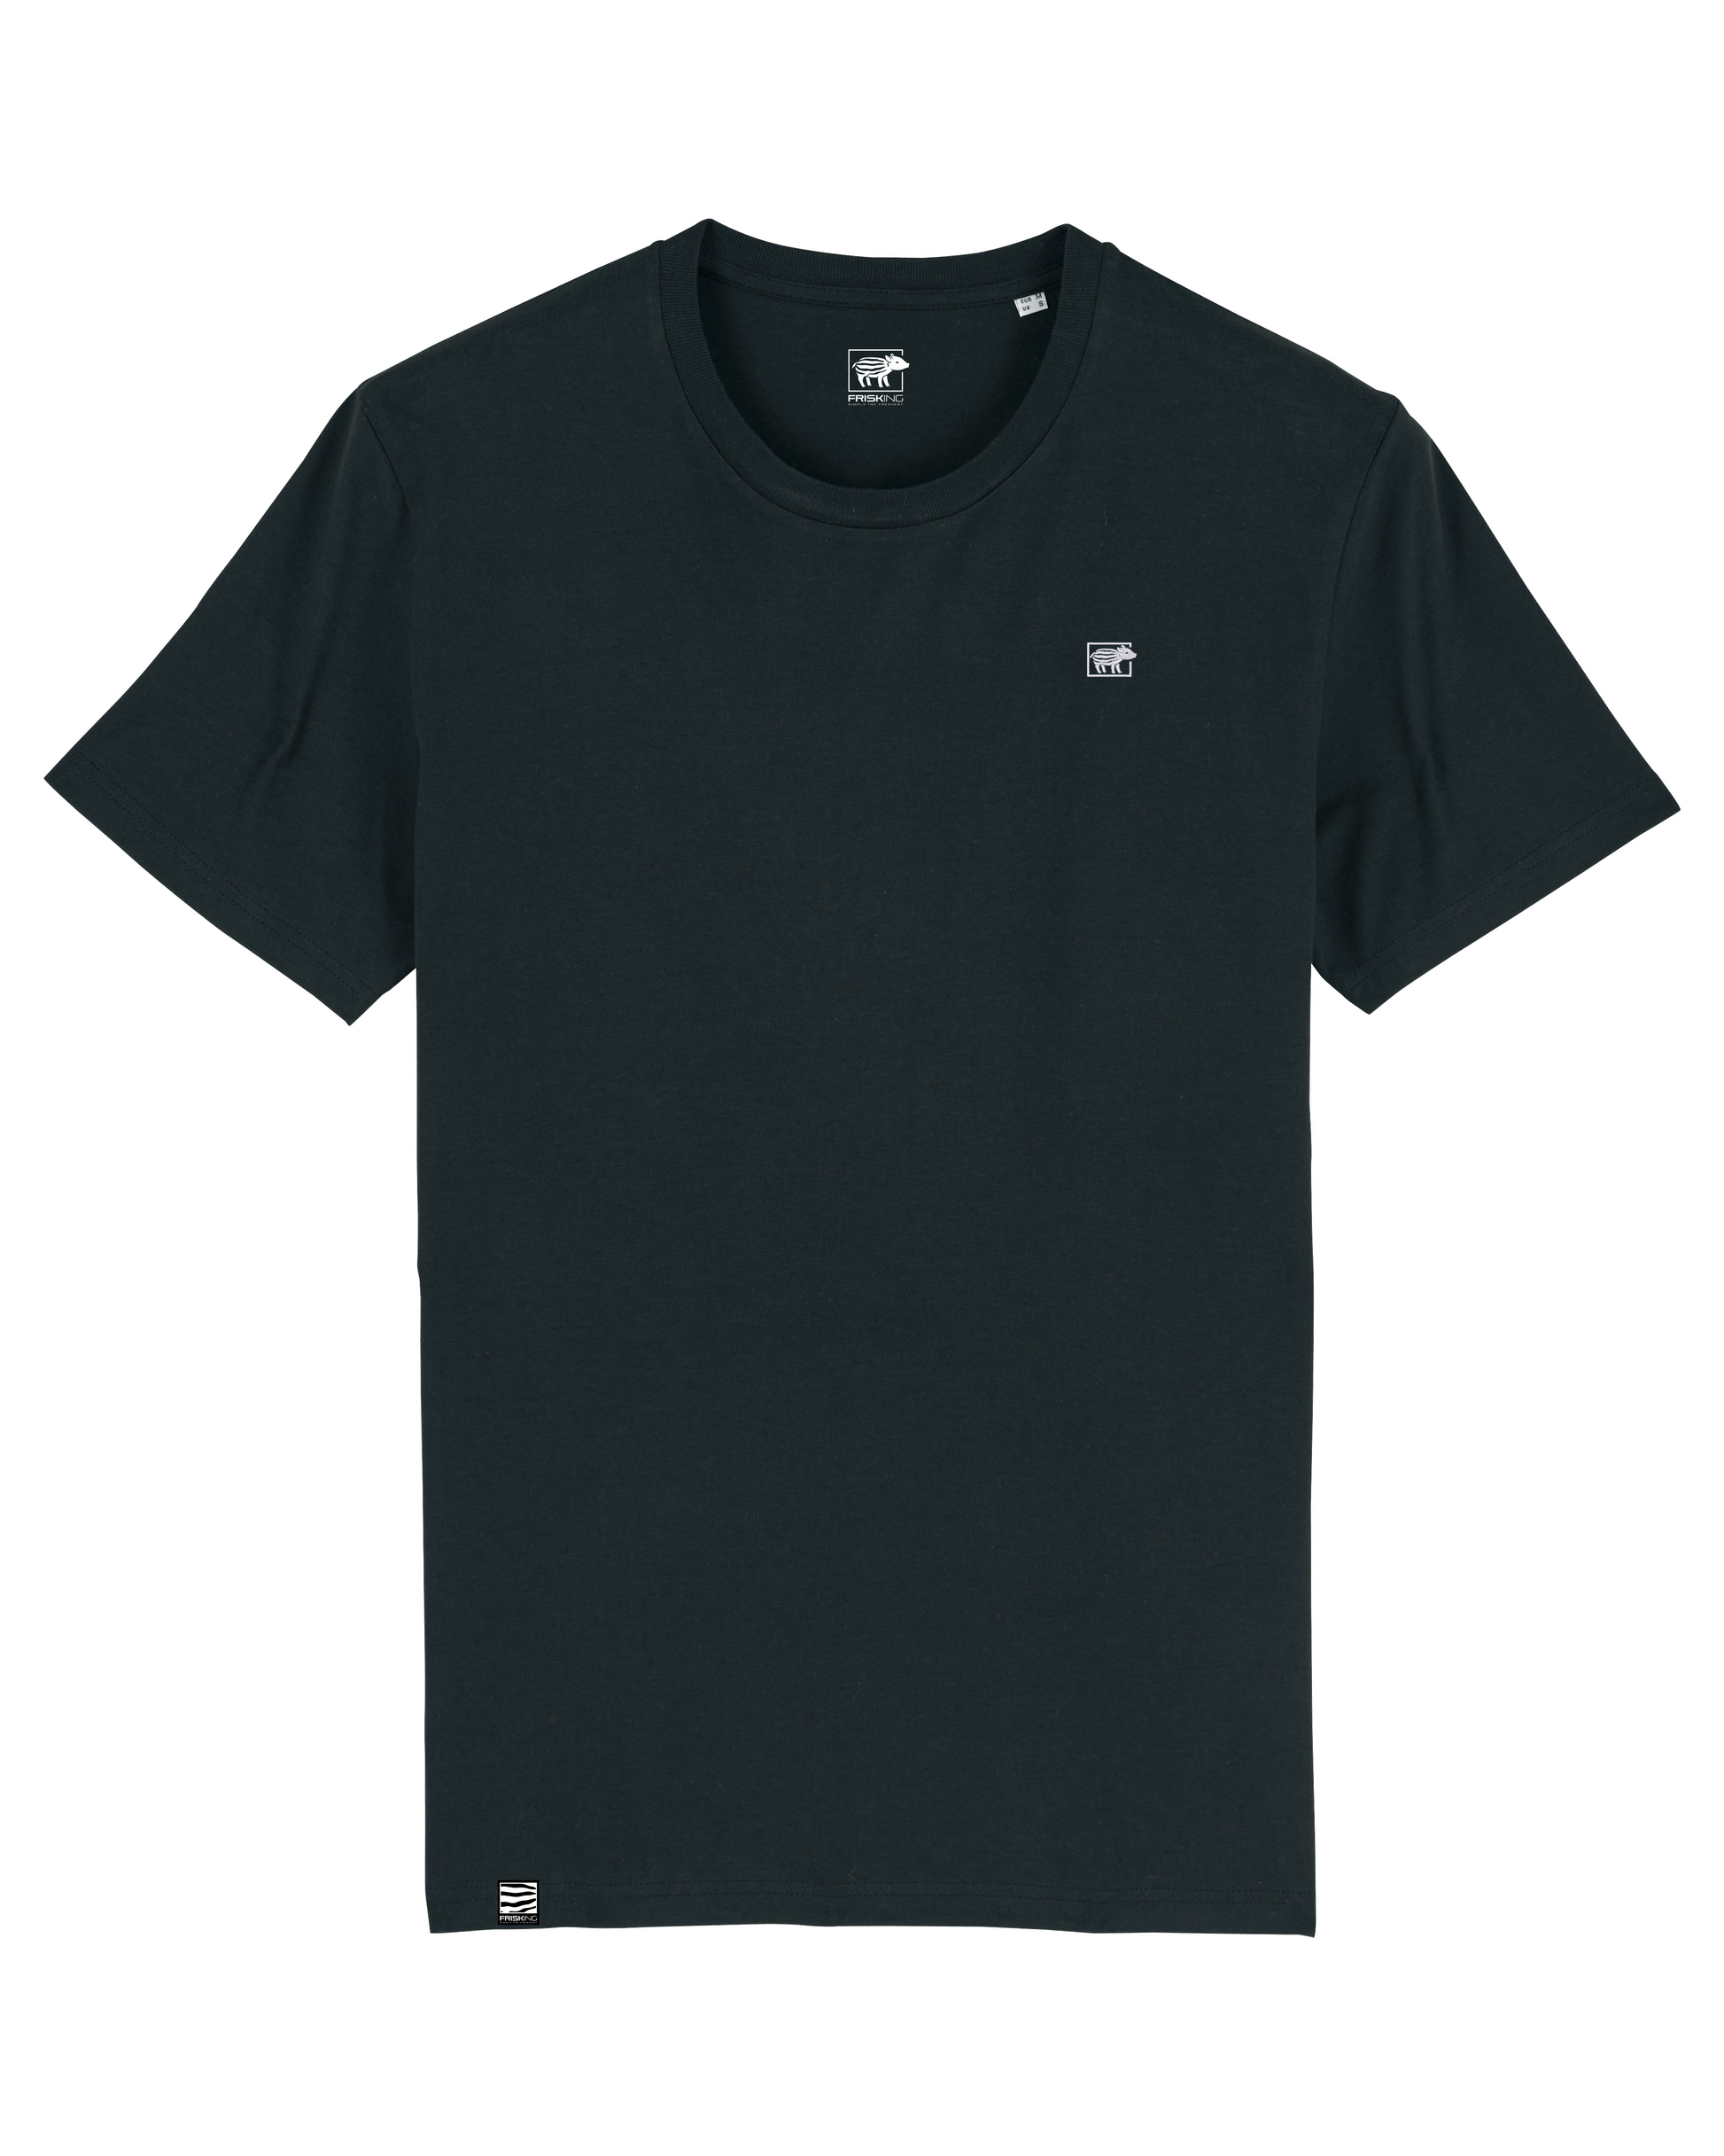 FRISKING Unisex T-Shirt "casual", Shirt, simply the freshest, streetwear